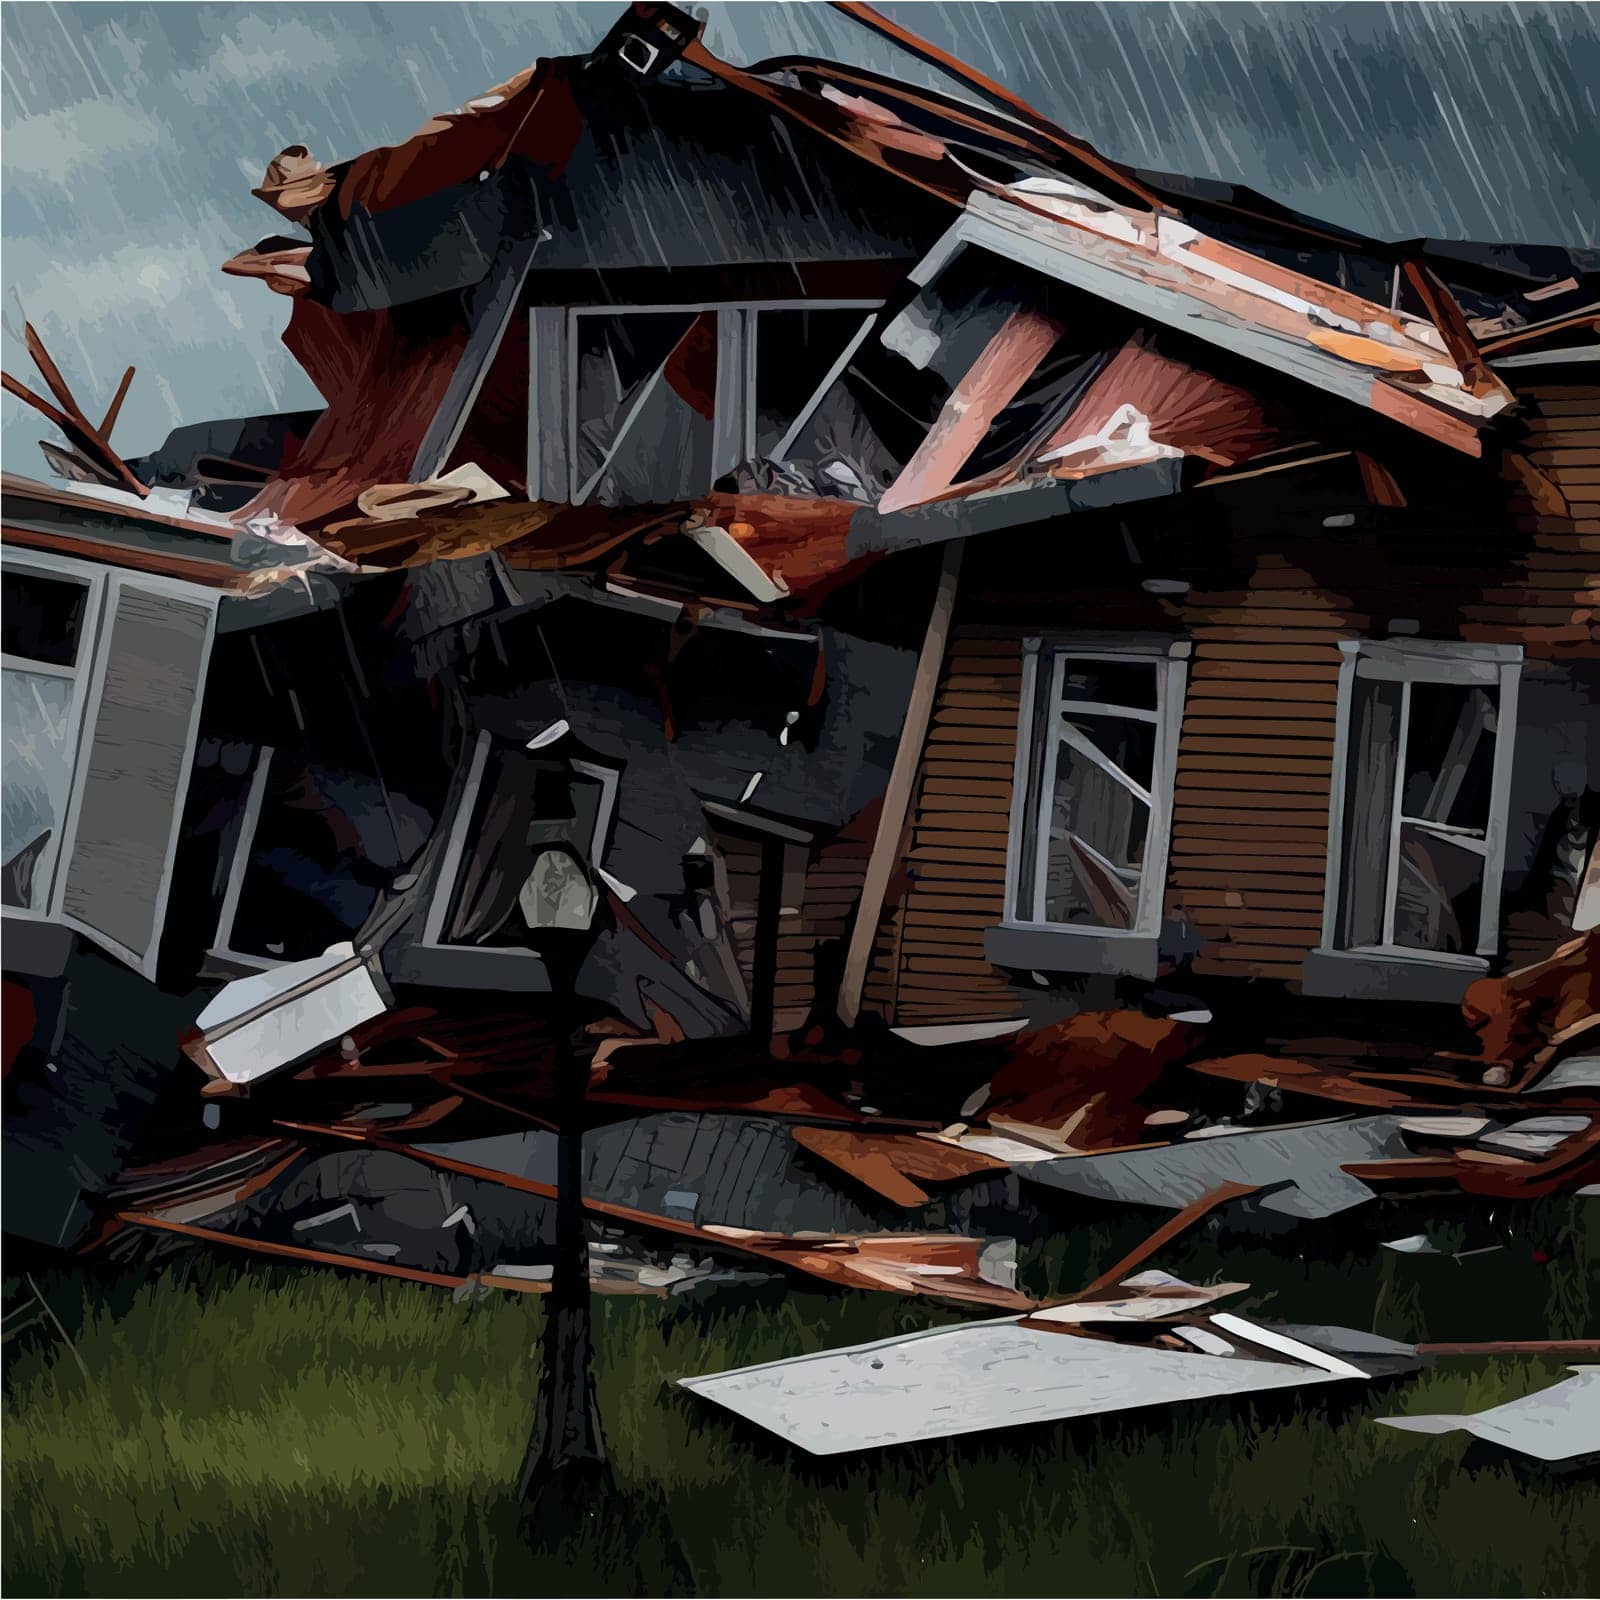 Destructive tornado destroys house, trees will break. Bad weather by EkaterinaPereslavtseva